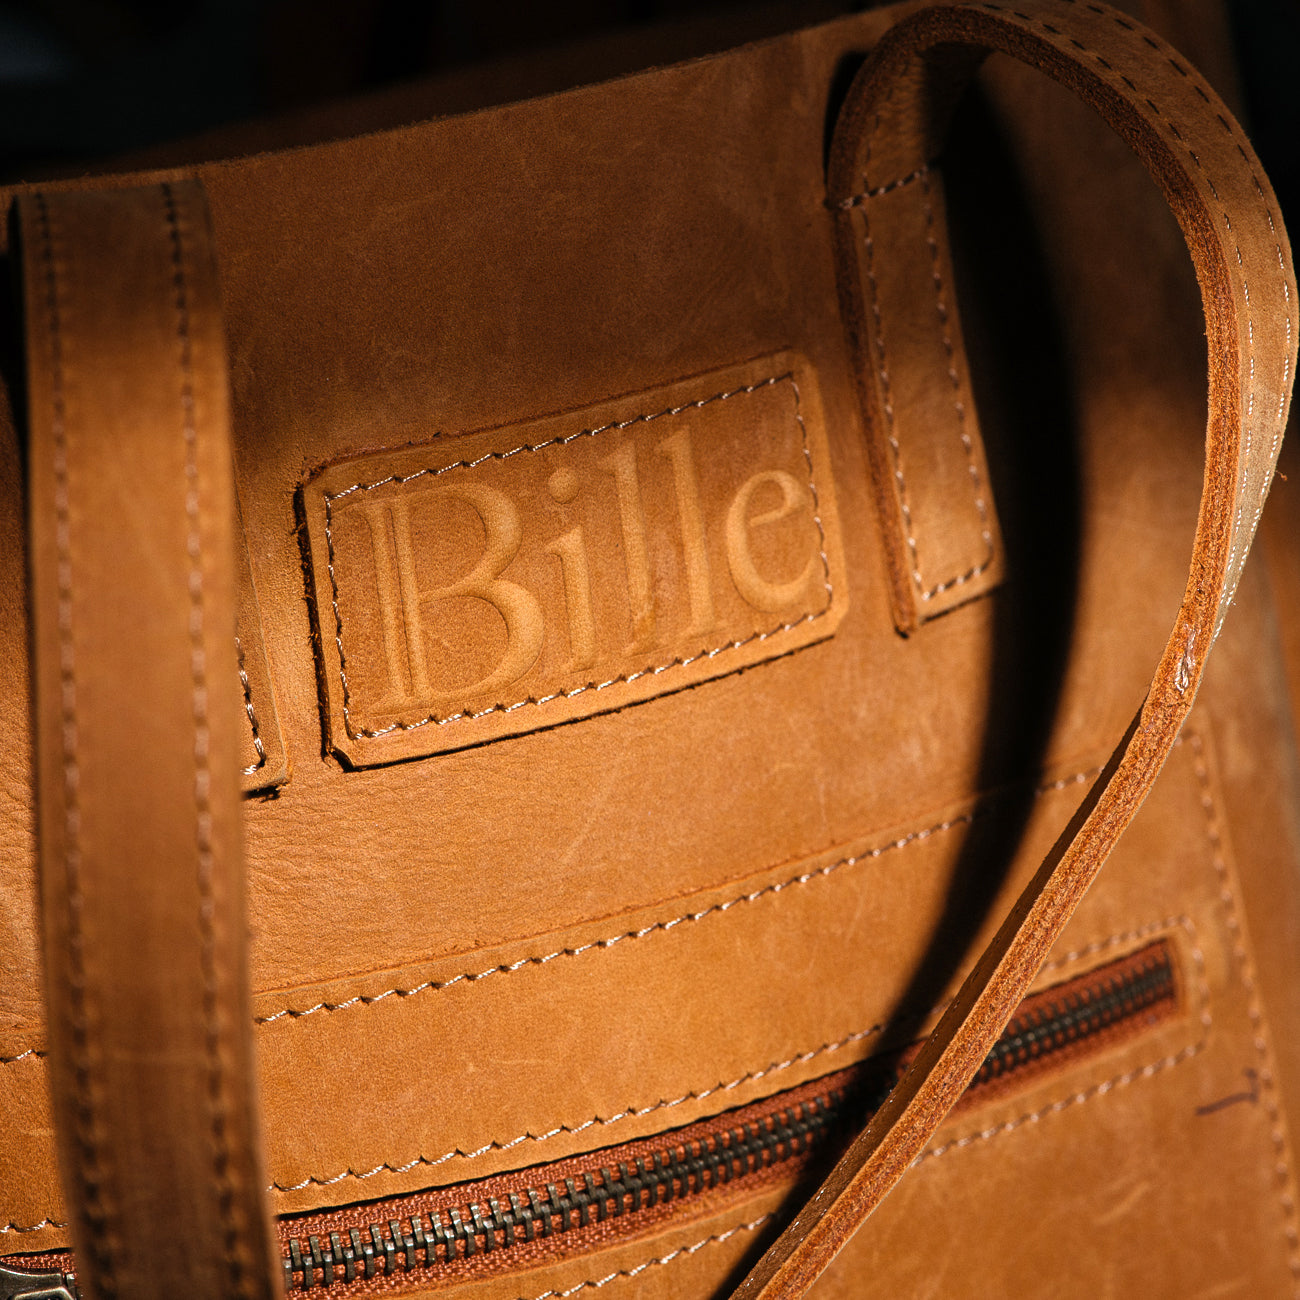 Bille beautiful leather handbags